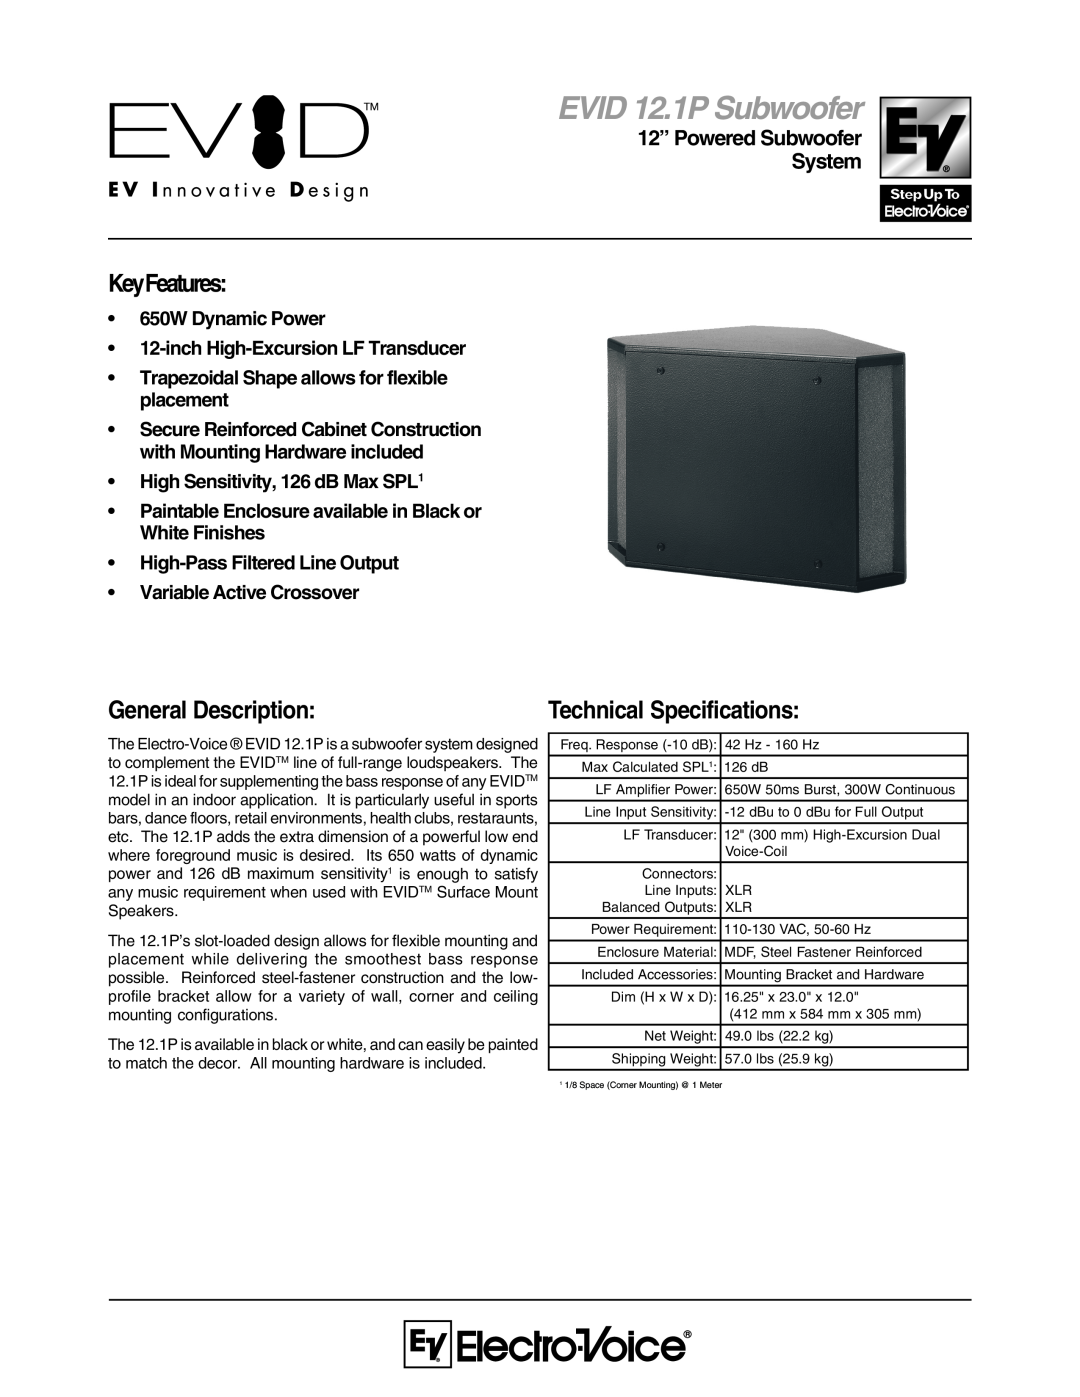 Electro-Voice EVID 12.1P technical specifications KeyFeatures, General Description, 650W Dynamic Power 